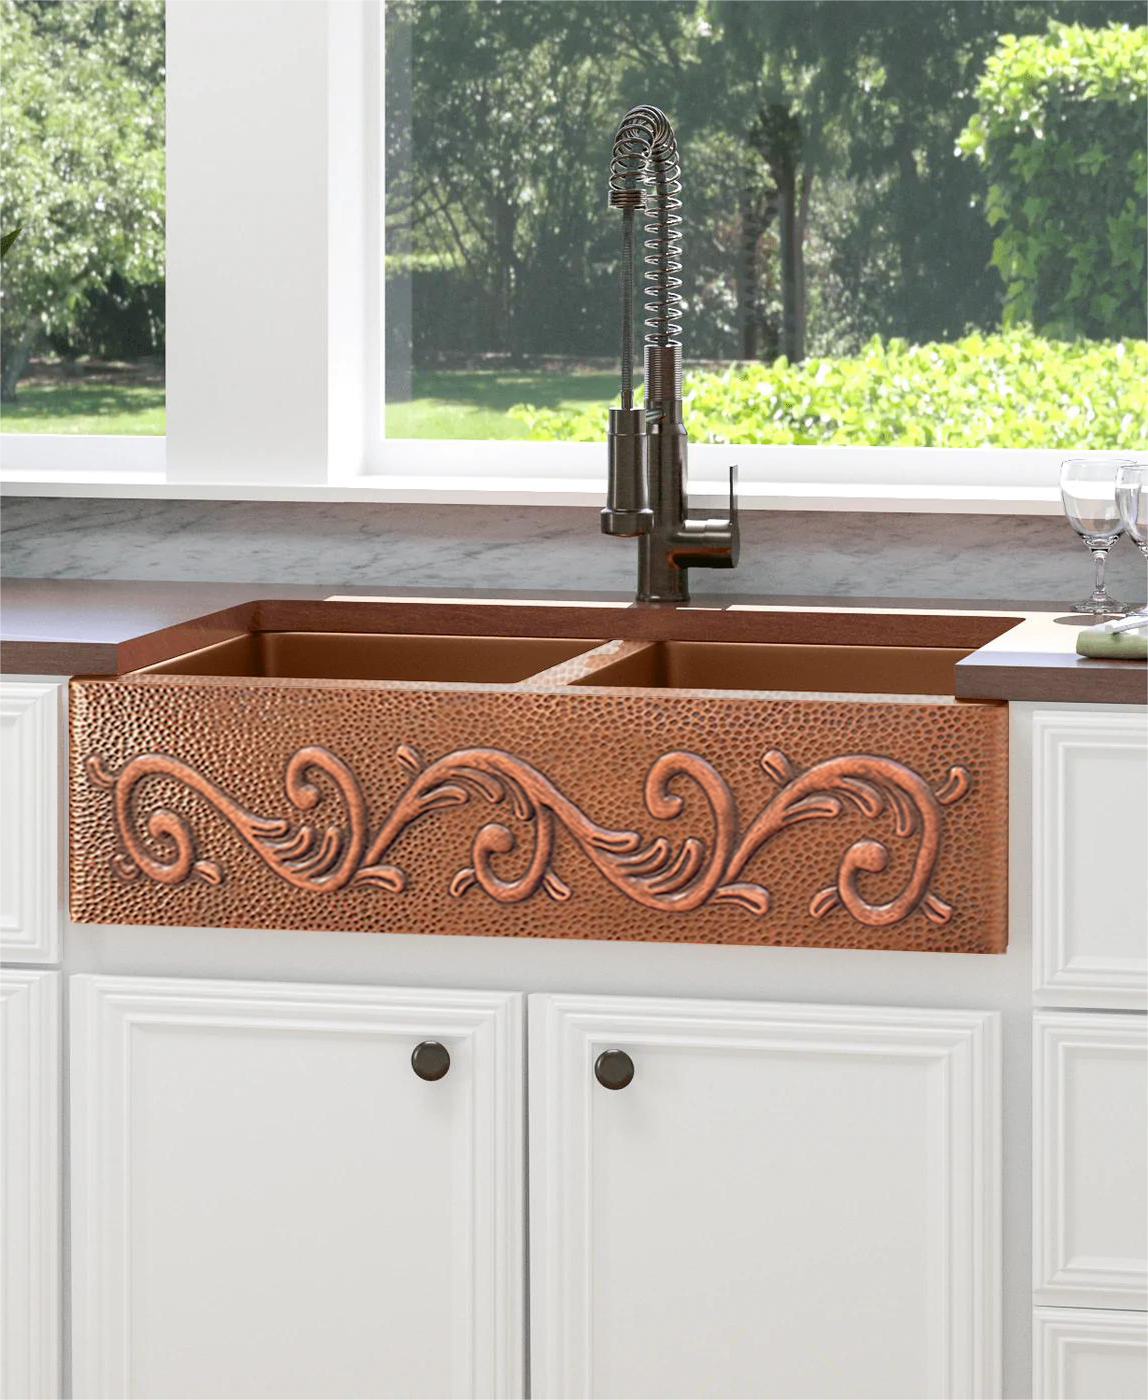 Fobest custom copper sink